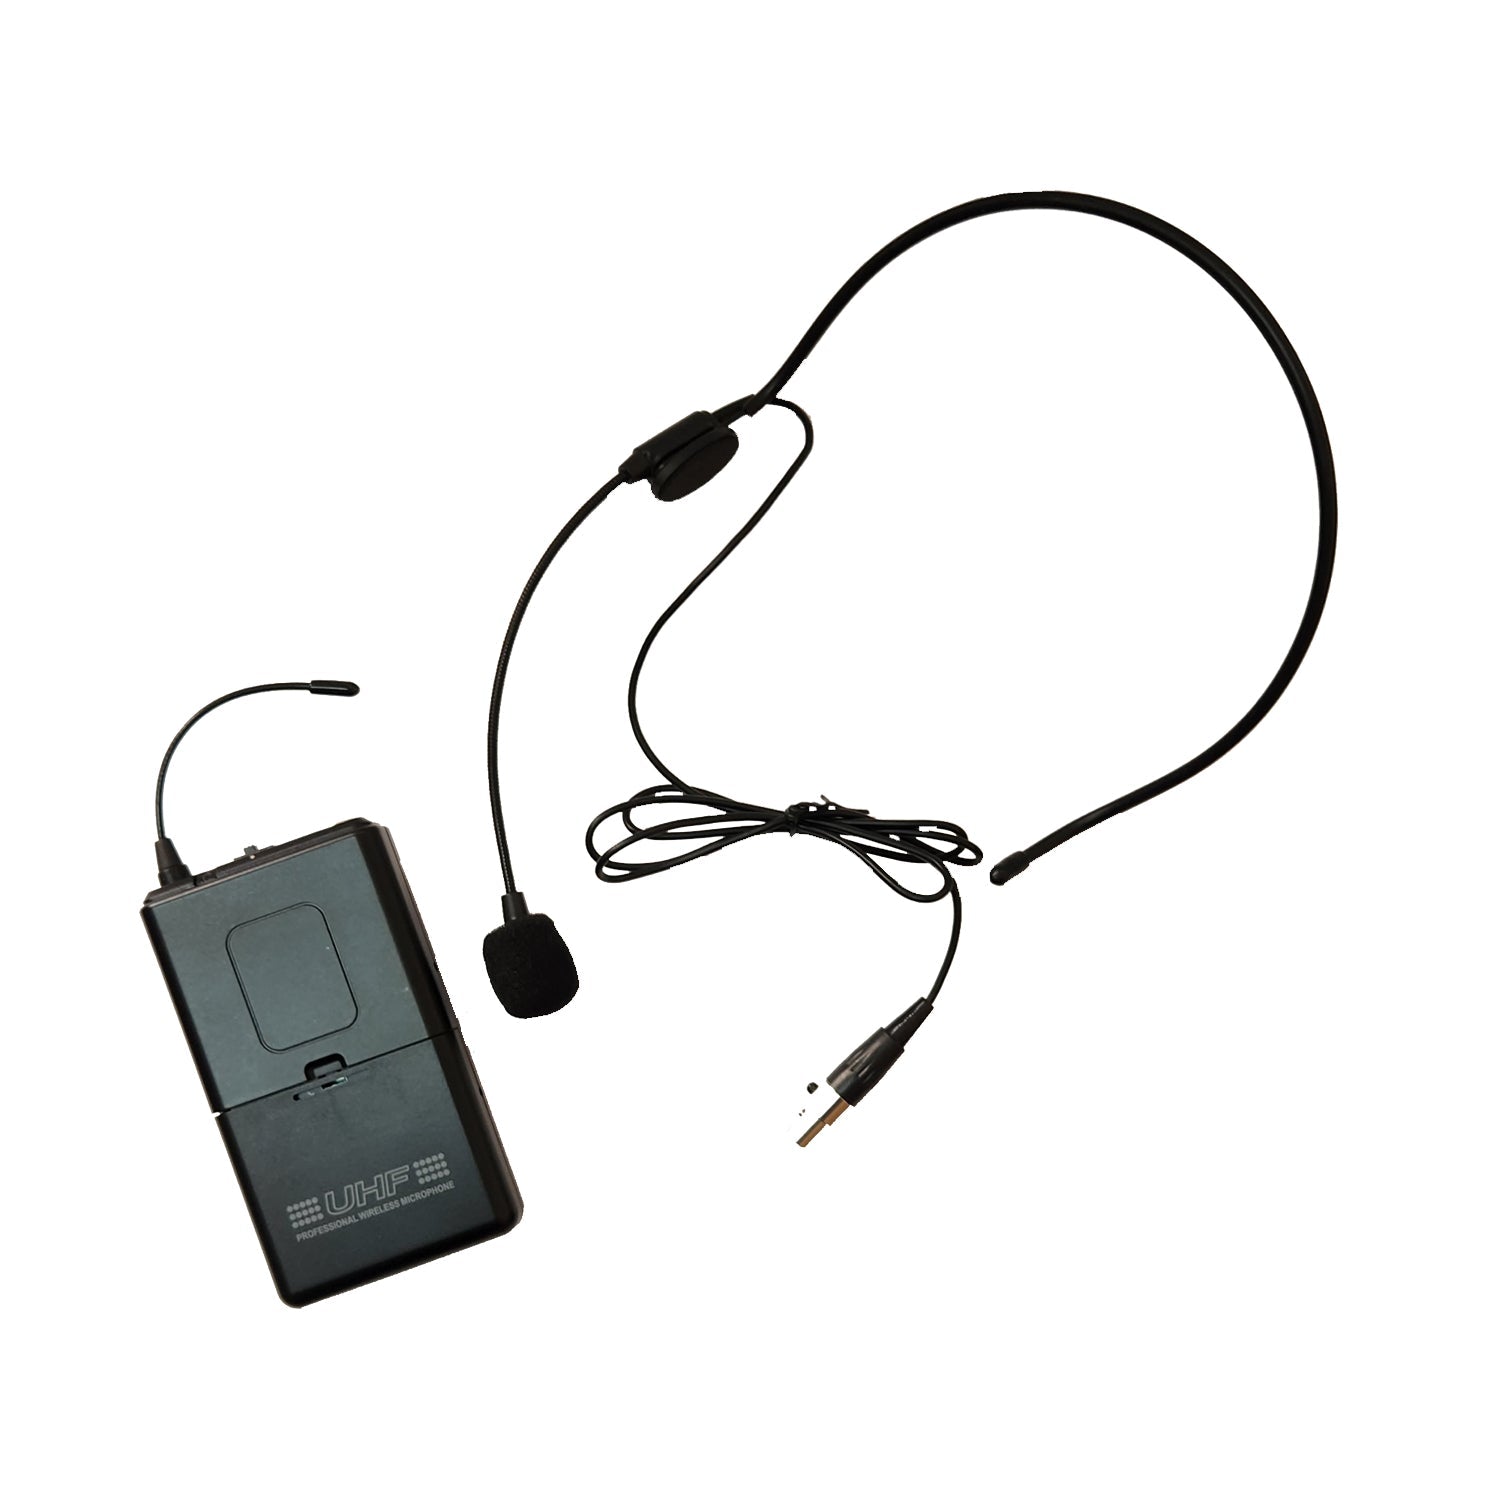 Sonken WM-800D Series (Optional) 1x Wireless Body Pack (555.80Mhz) and 1x Headset Microphone - Karaoke Home Entertainment